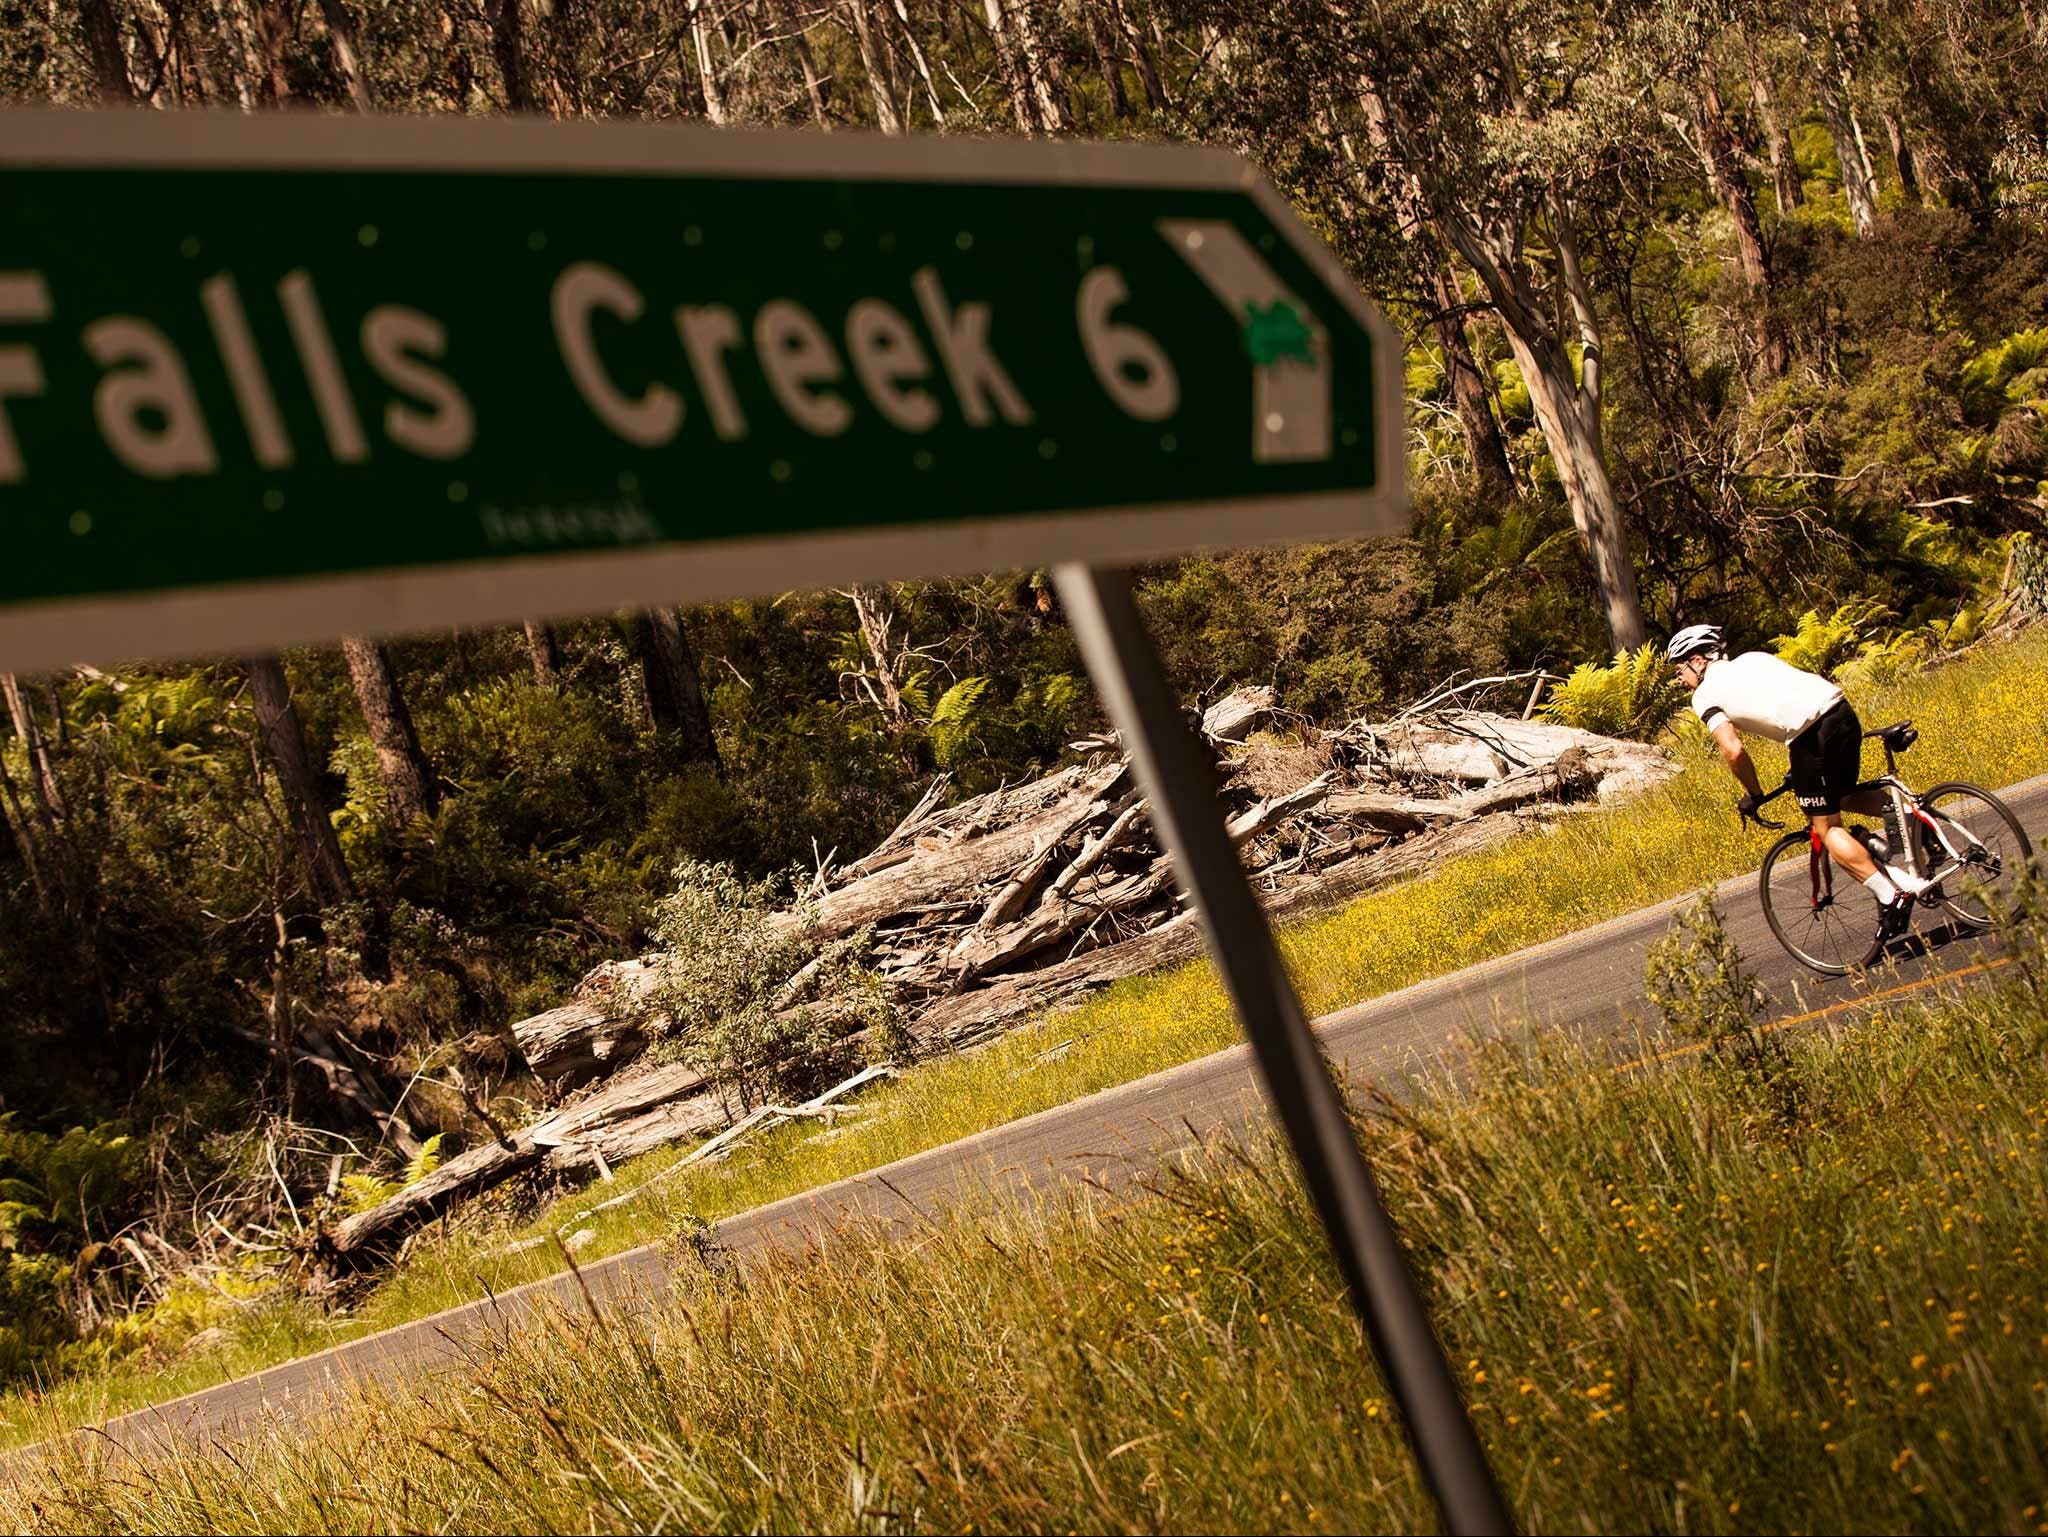 7 Peaks Ride - Falls Creek - Accommodation Mt Buller